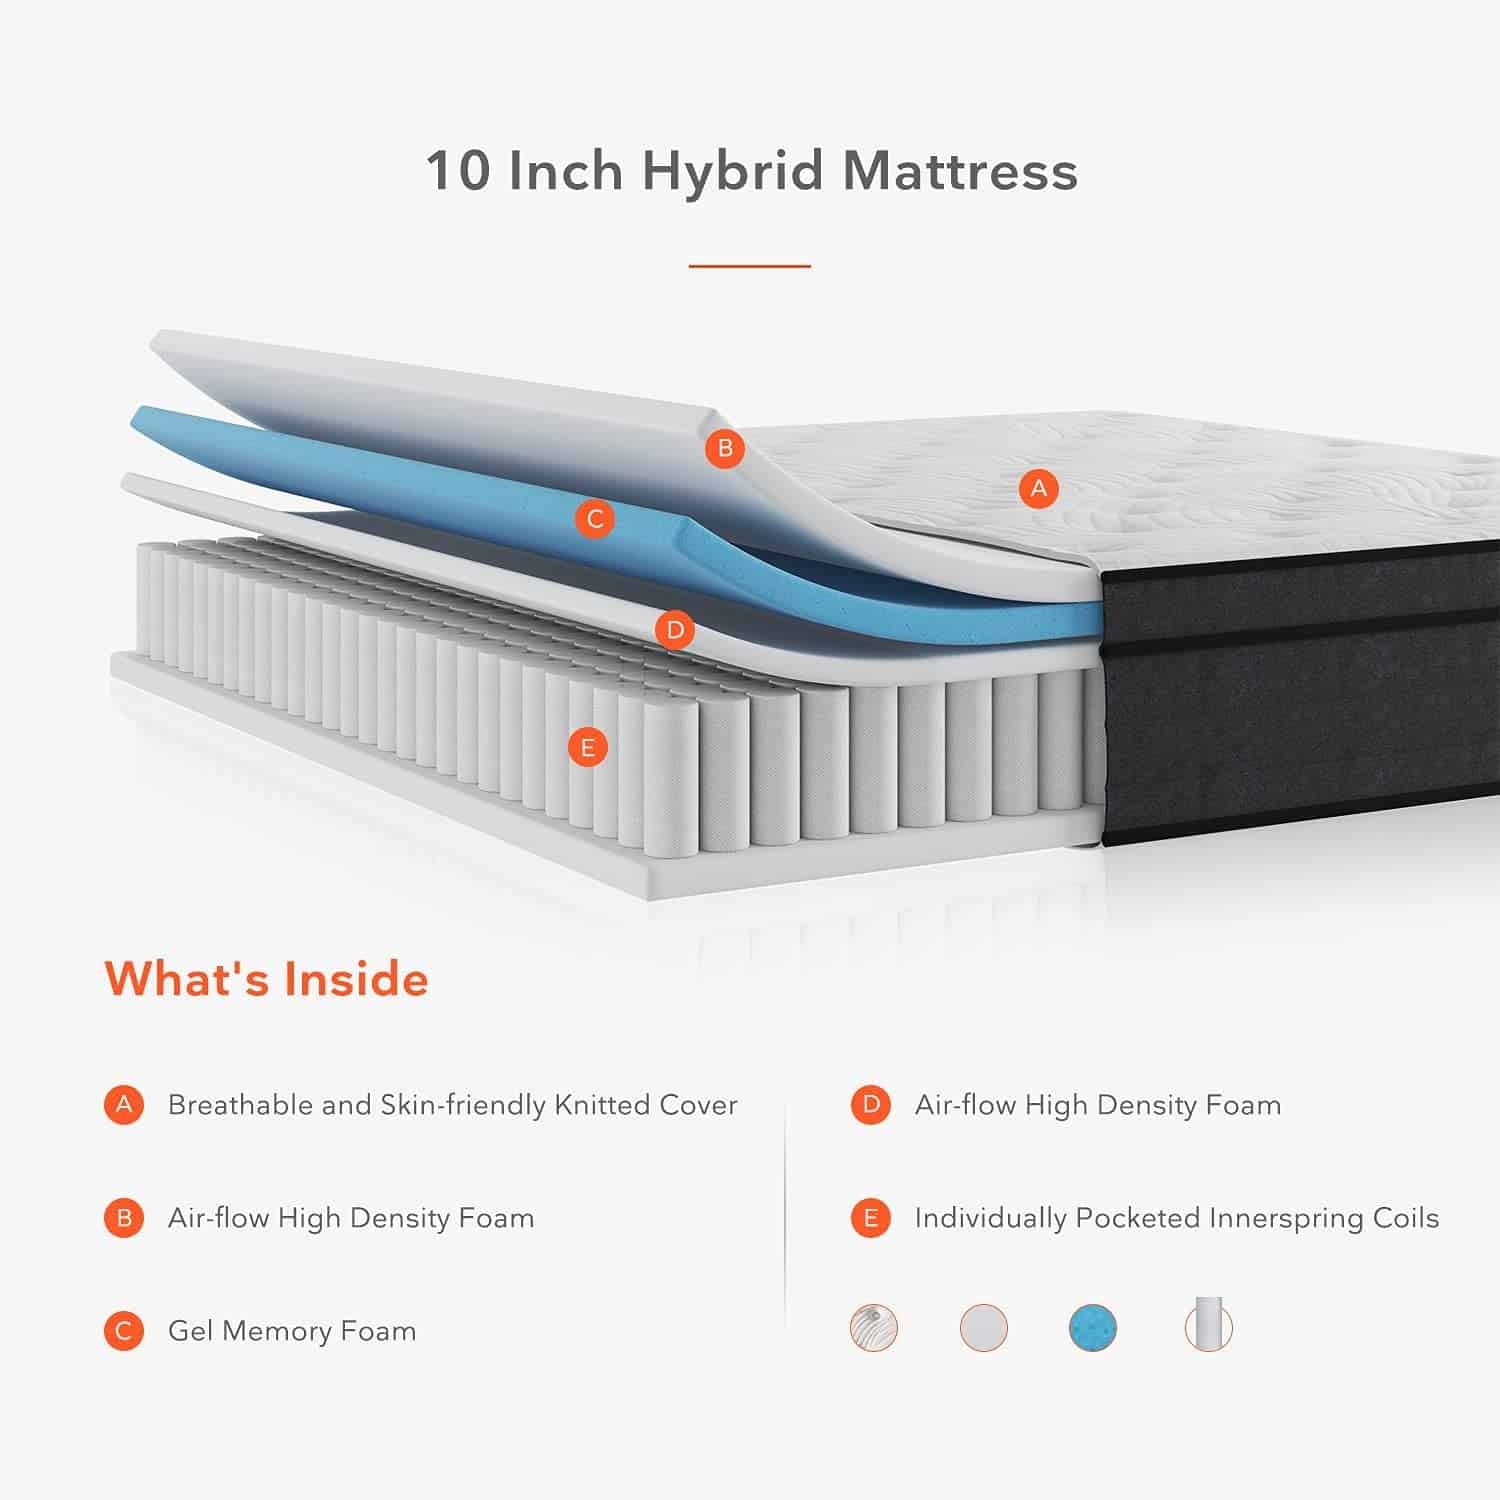 Hybrid mattress construction